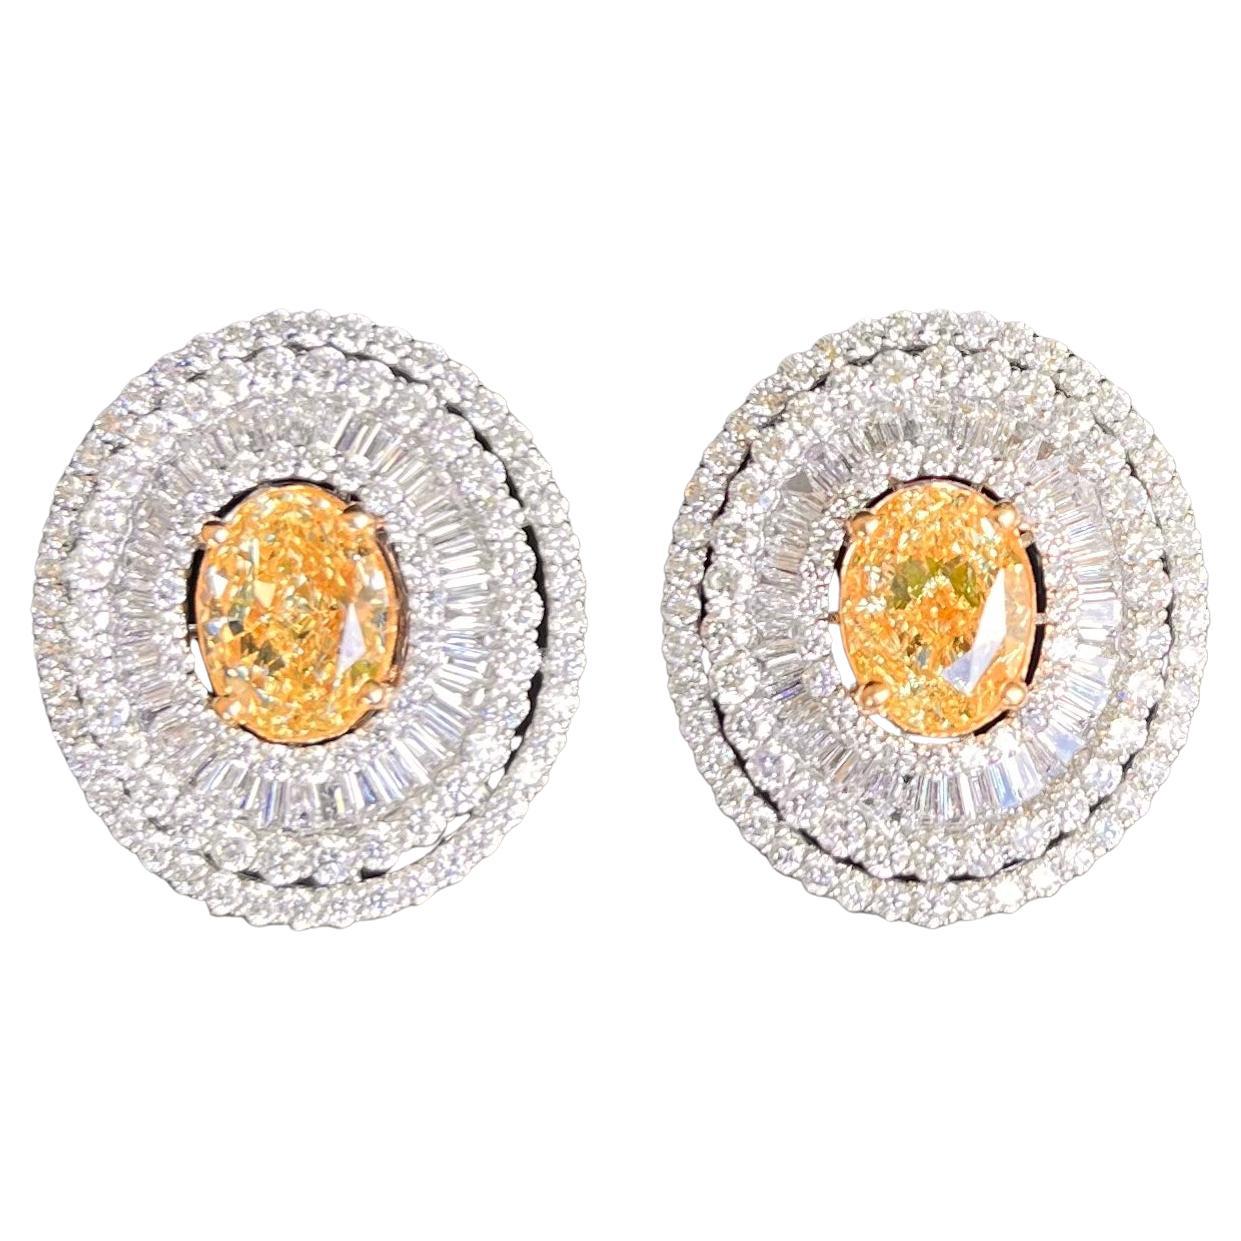 Phenomenal Pair of 17.39 Carat Fancy Yellow and White Diamond Earrings 18K Gold